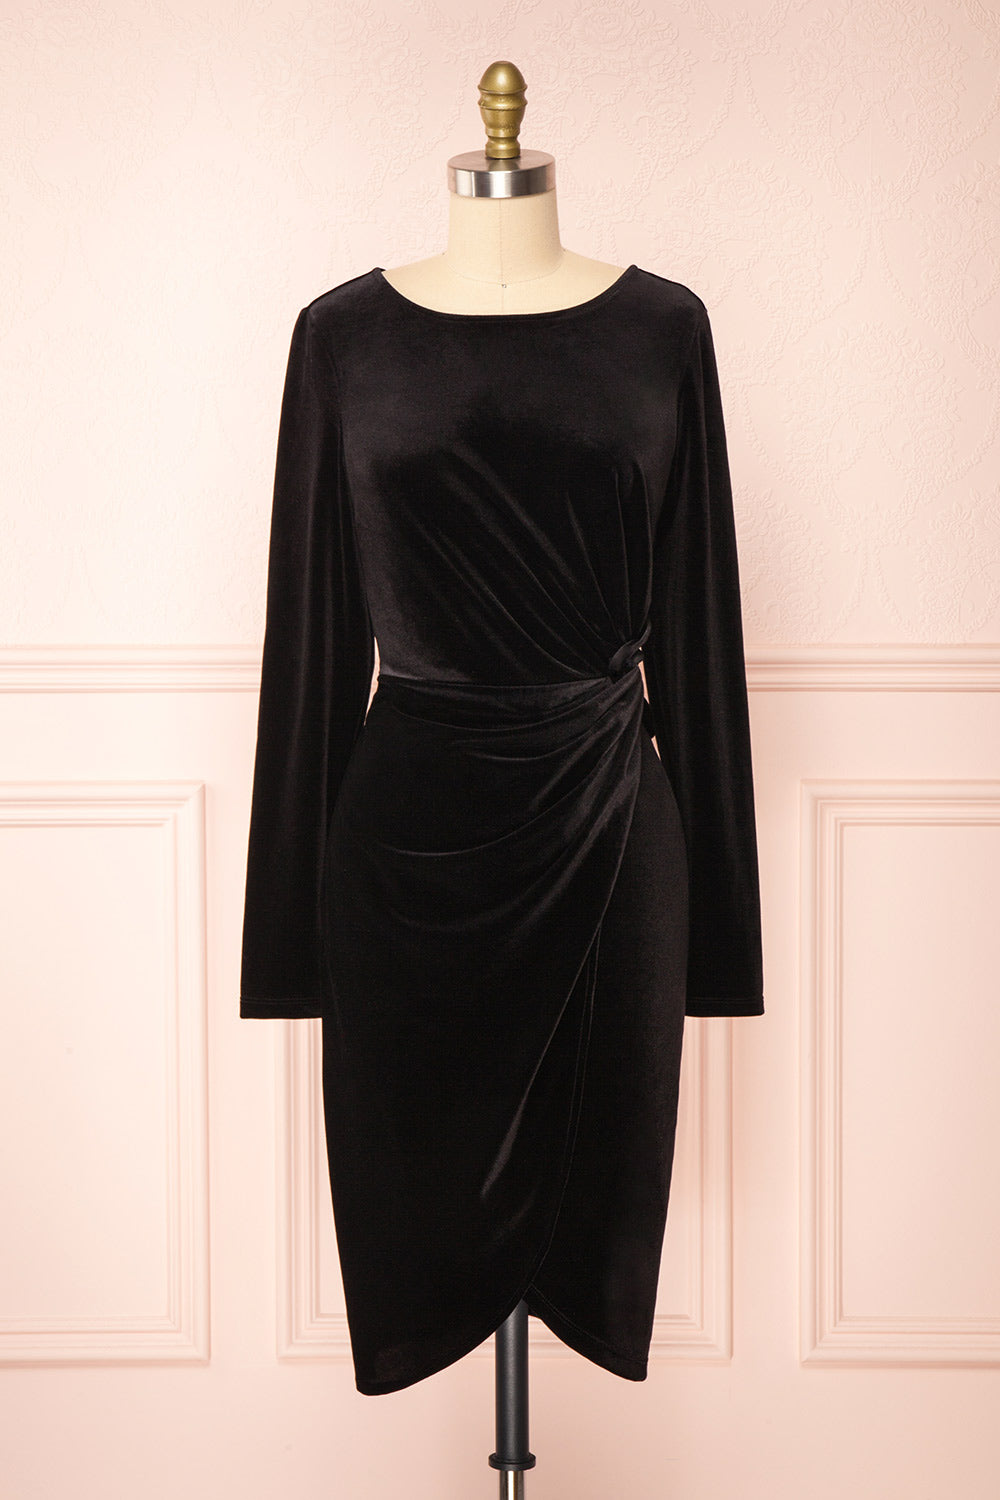 Cartagena Black Velvet Long Sleeve Dress | Boutique 1861 front view 